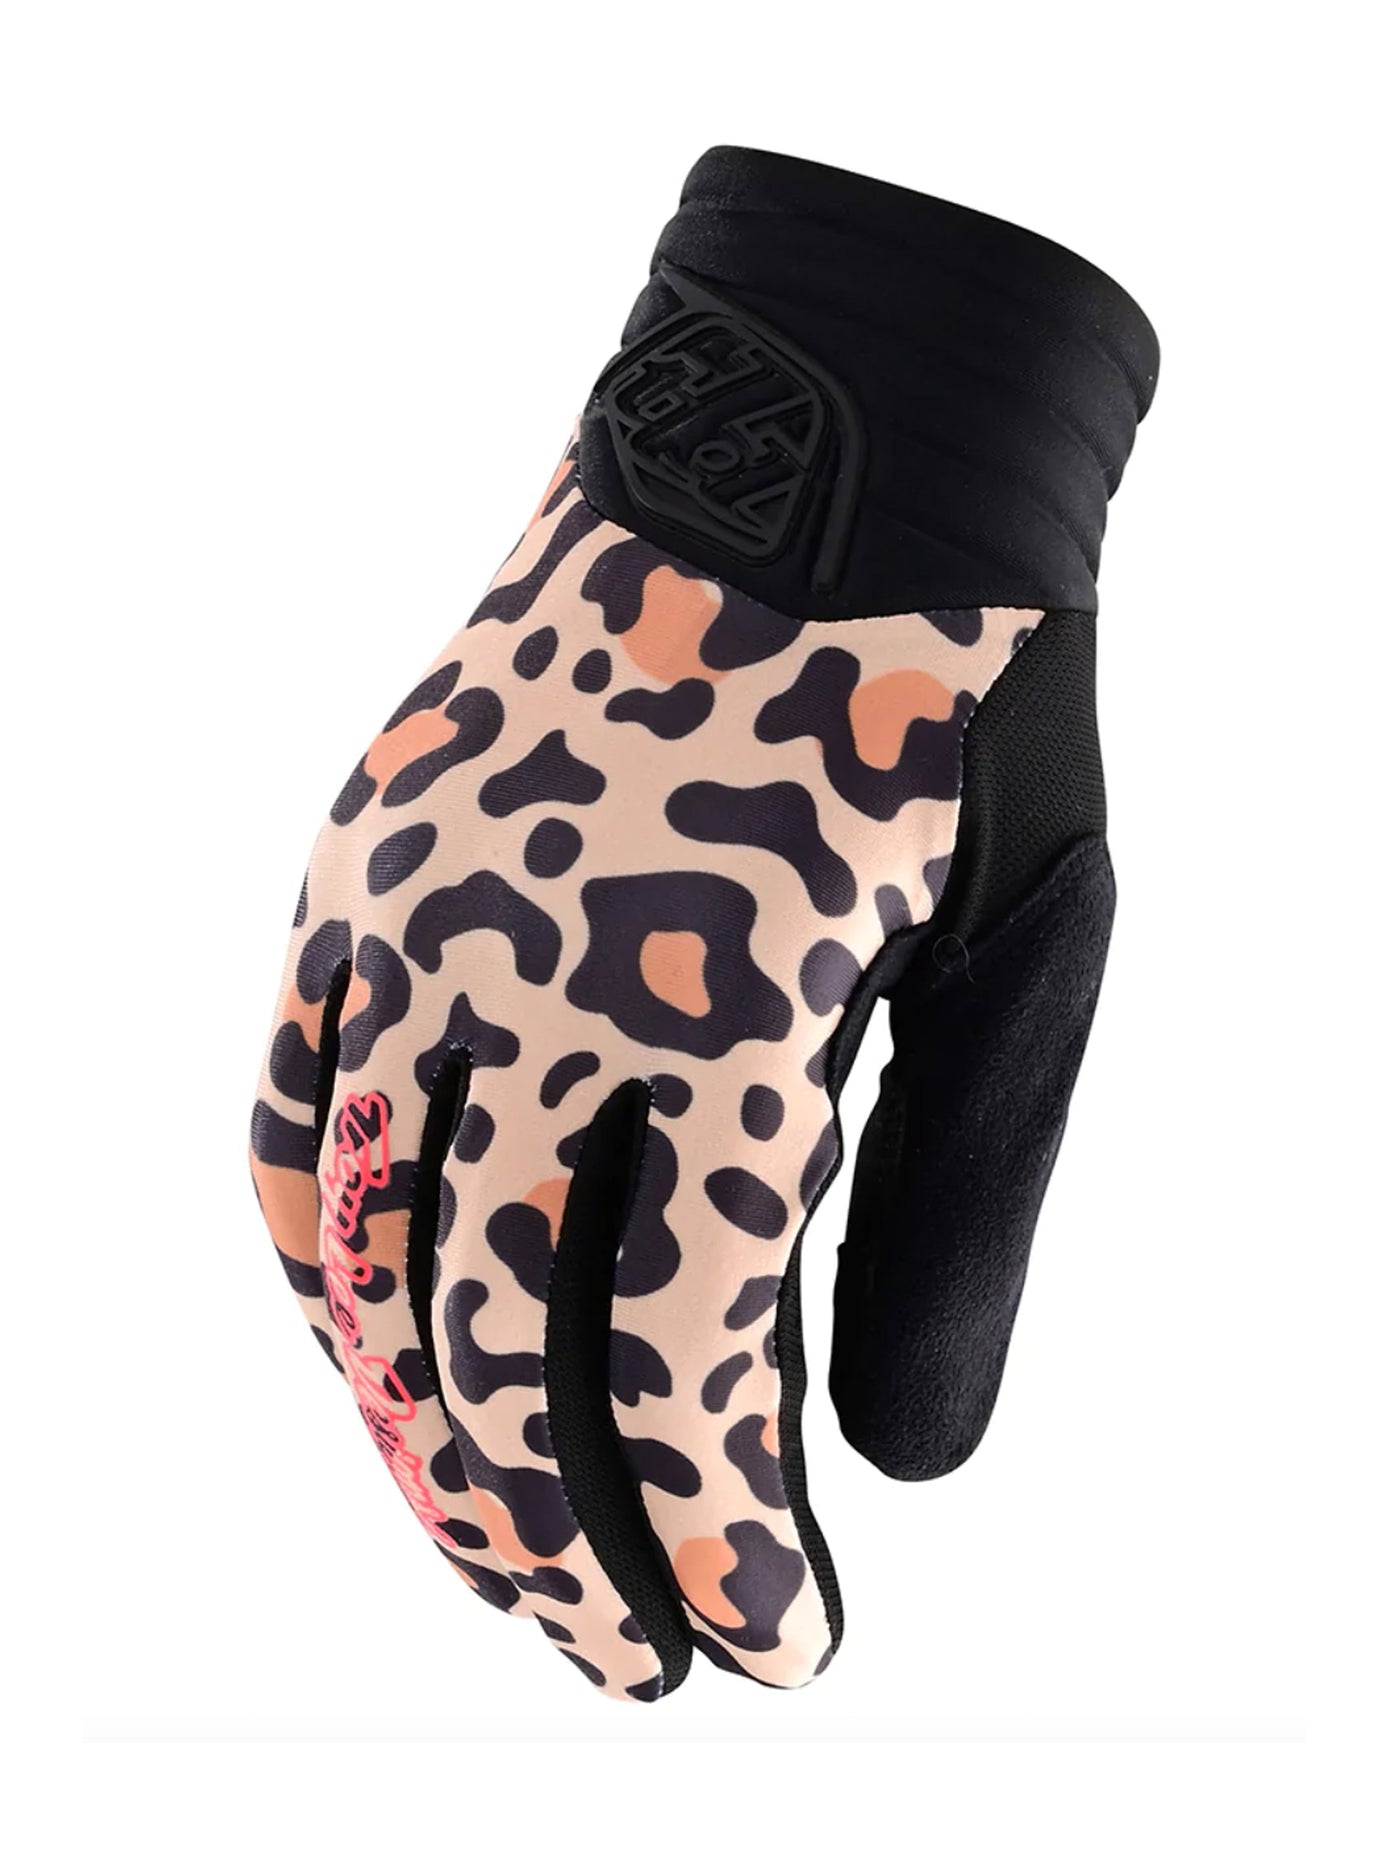 Troy Lee Designs guantes LUXE de mujer leopard